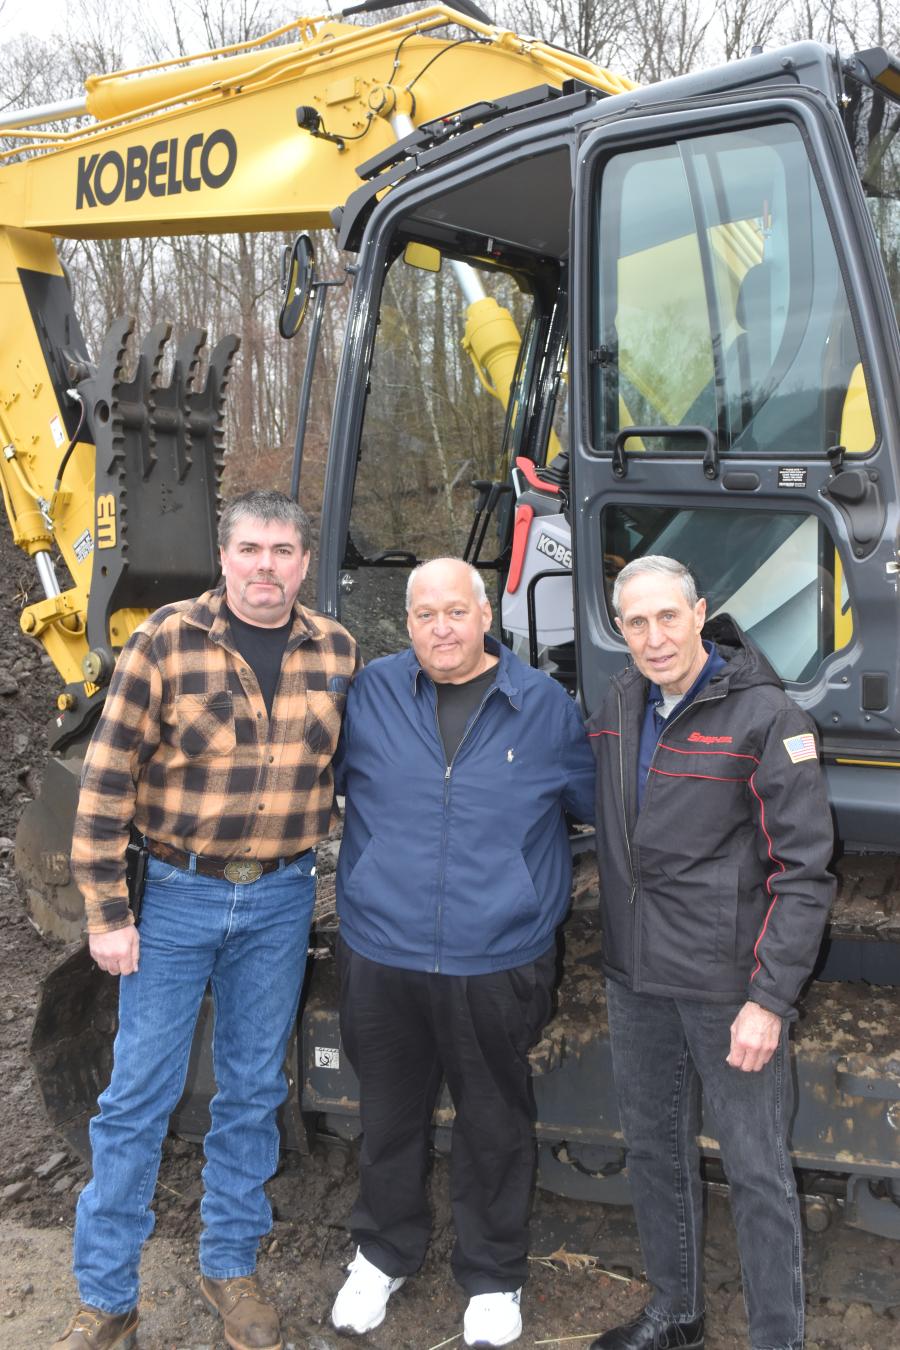 (L-R): Dennis Gallagher Sr., Westchester Tractor; John Maxner, Maxner Landscaping; and Frank Labarbera, retired from Westchester Tractor, alongside a Kobelco SK210 excavator.
(CEG photo)